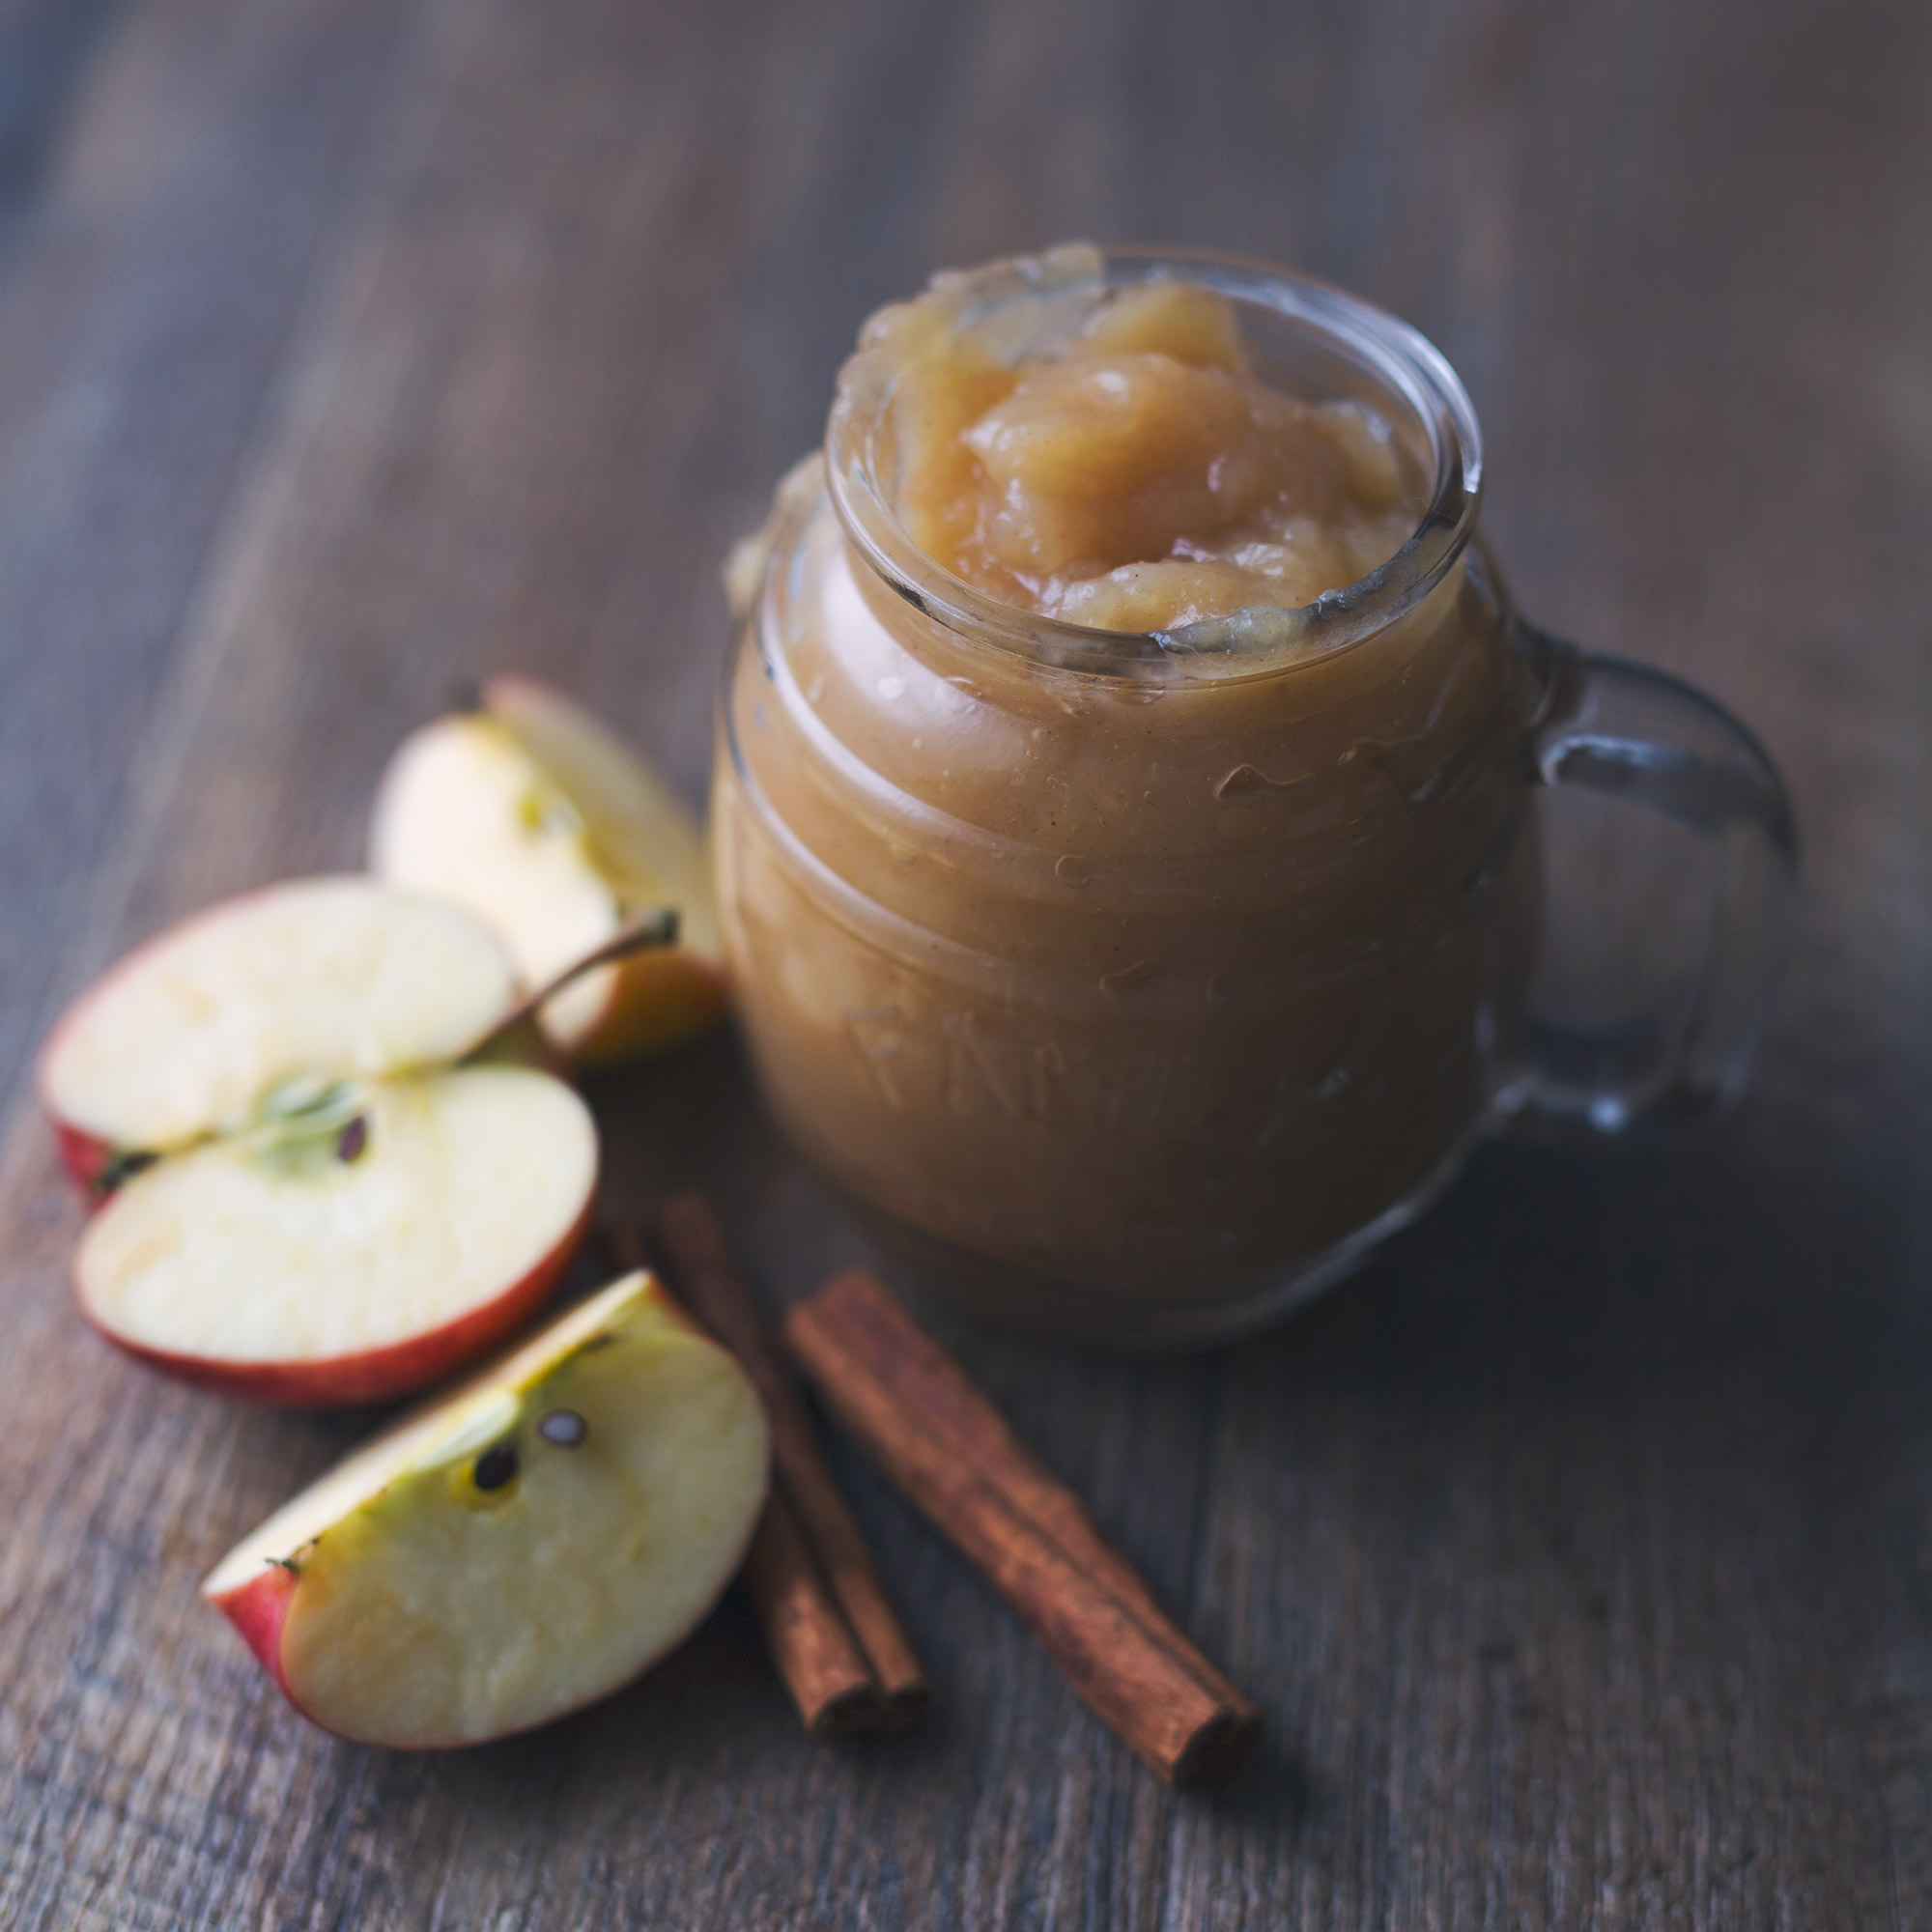 Homemade Sugar-free Applesauce